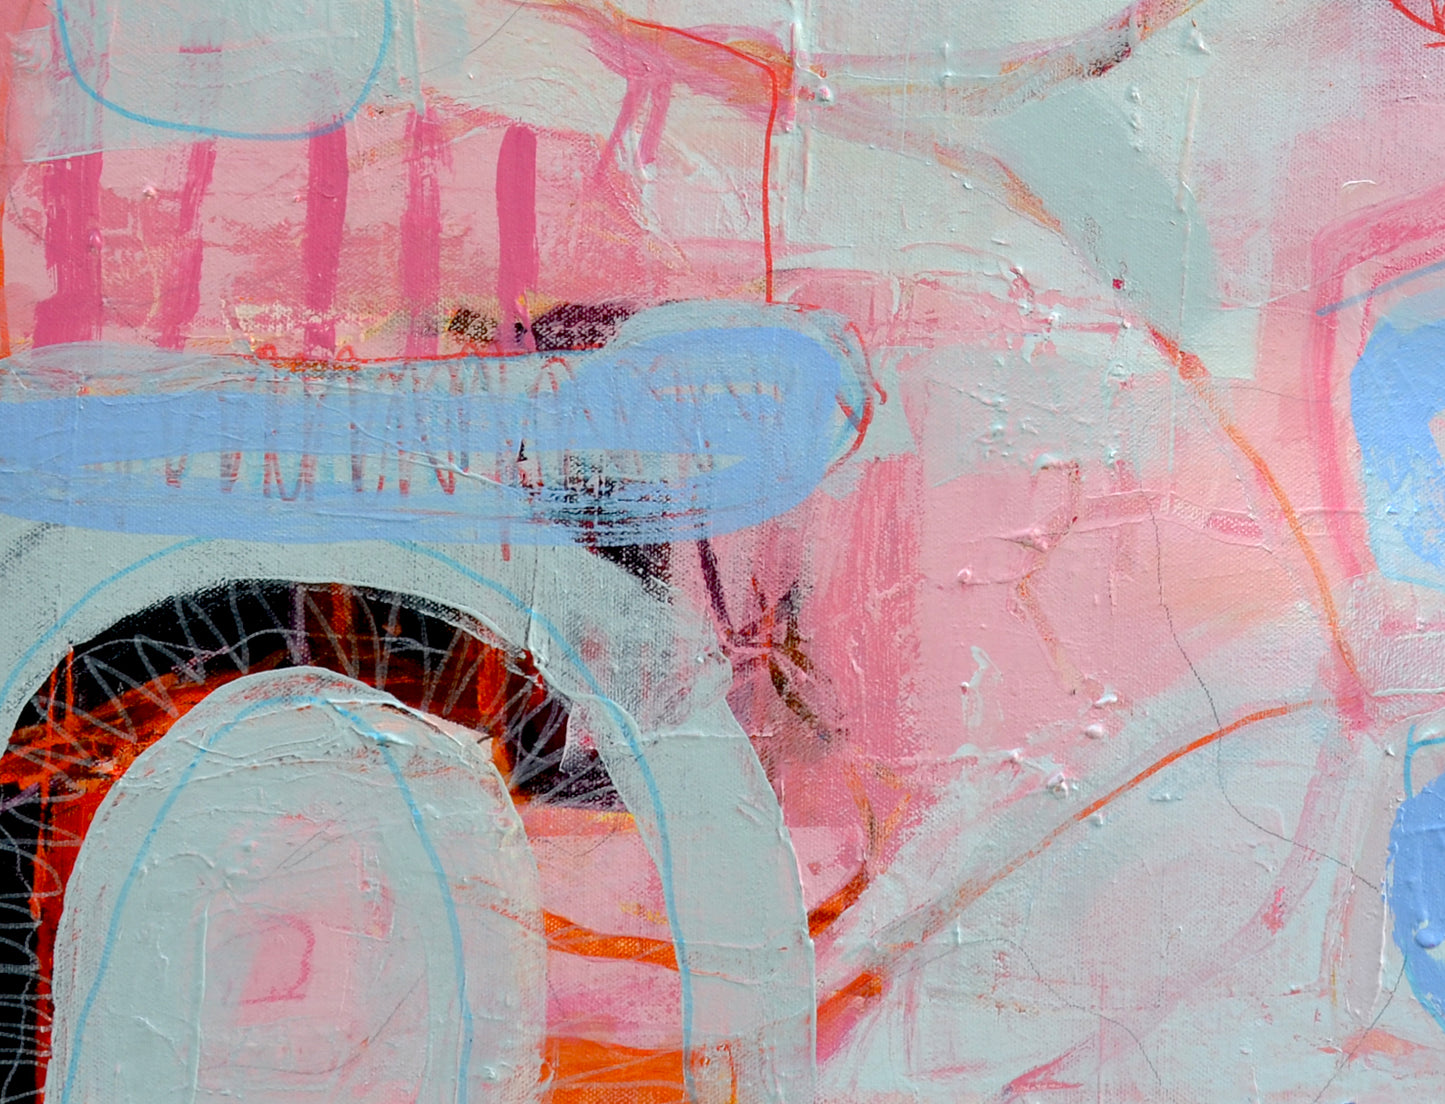 Abstract Art: Pink Transitions #2: Precinct